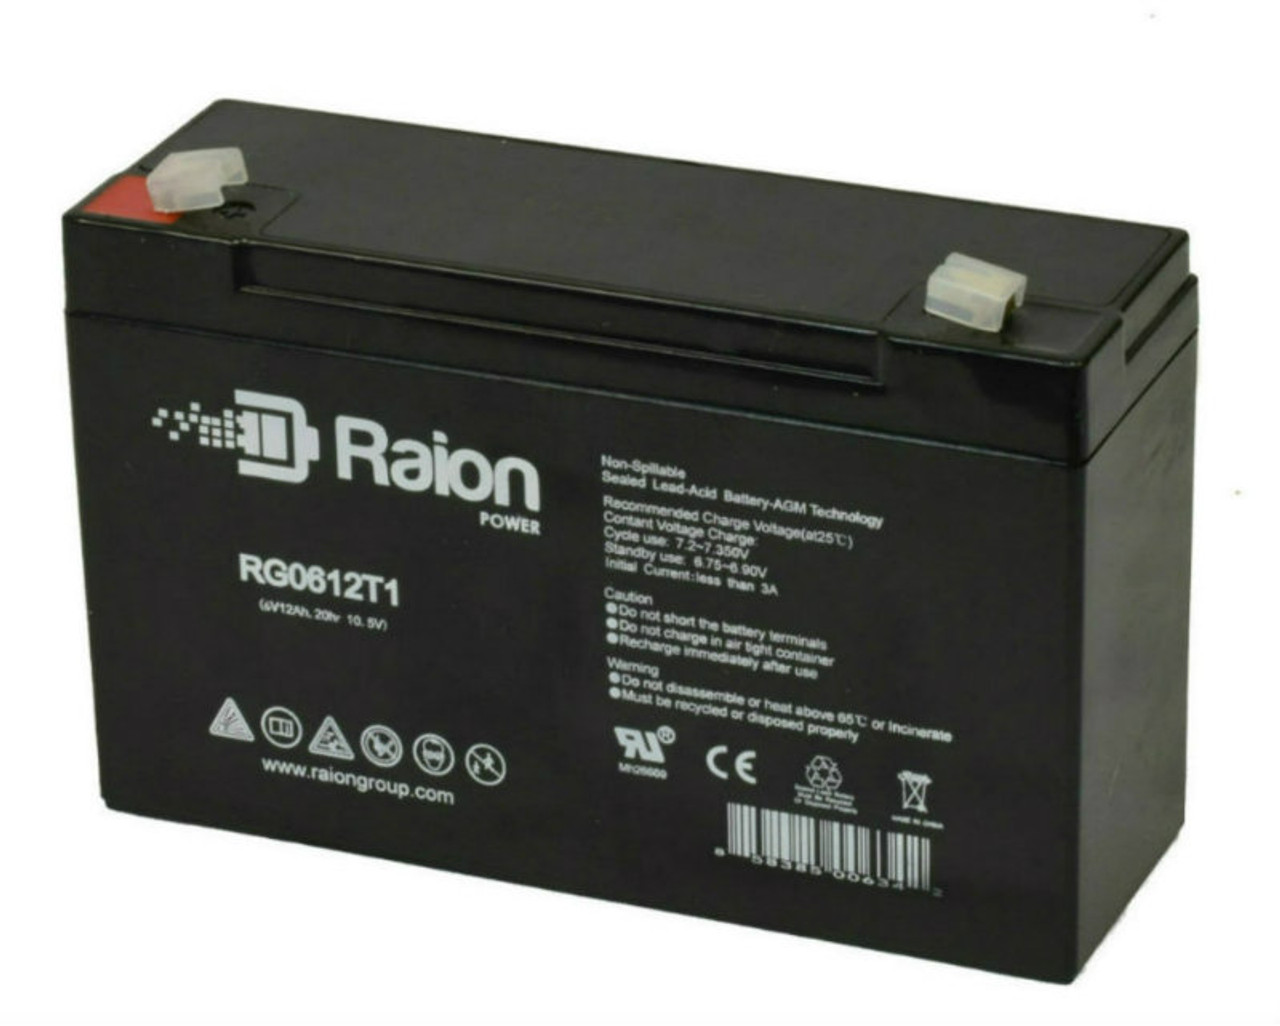 Raion Power RG06120T1 Replacement 6V 12Ah Emergency Light Battery for Elan 1628